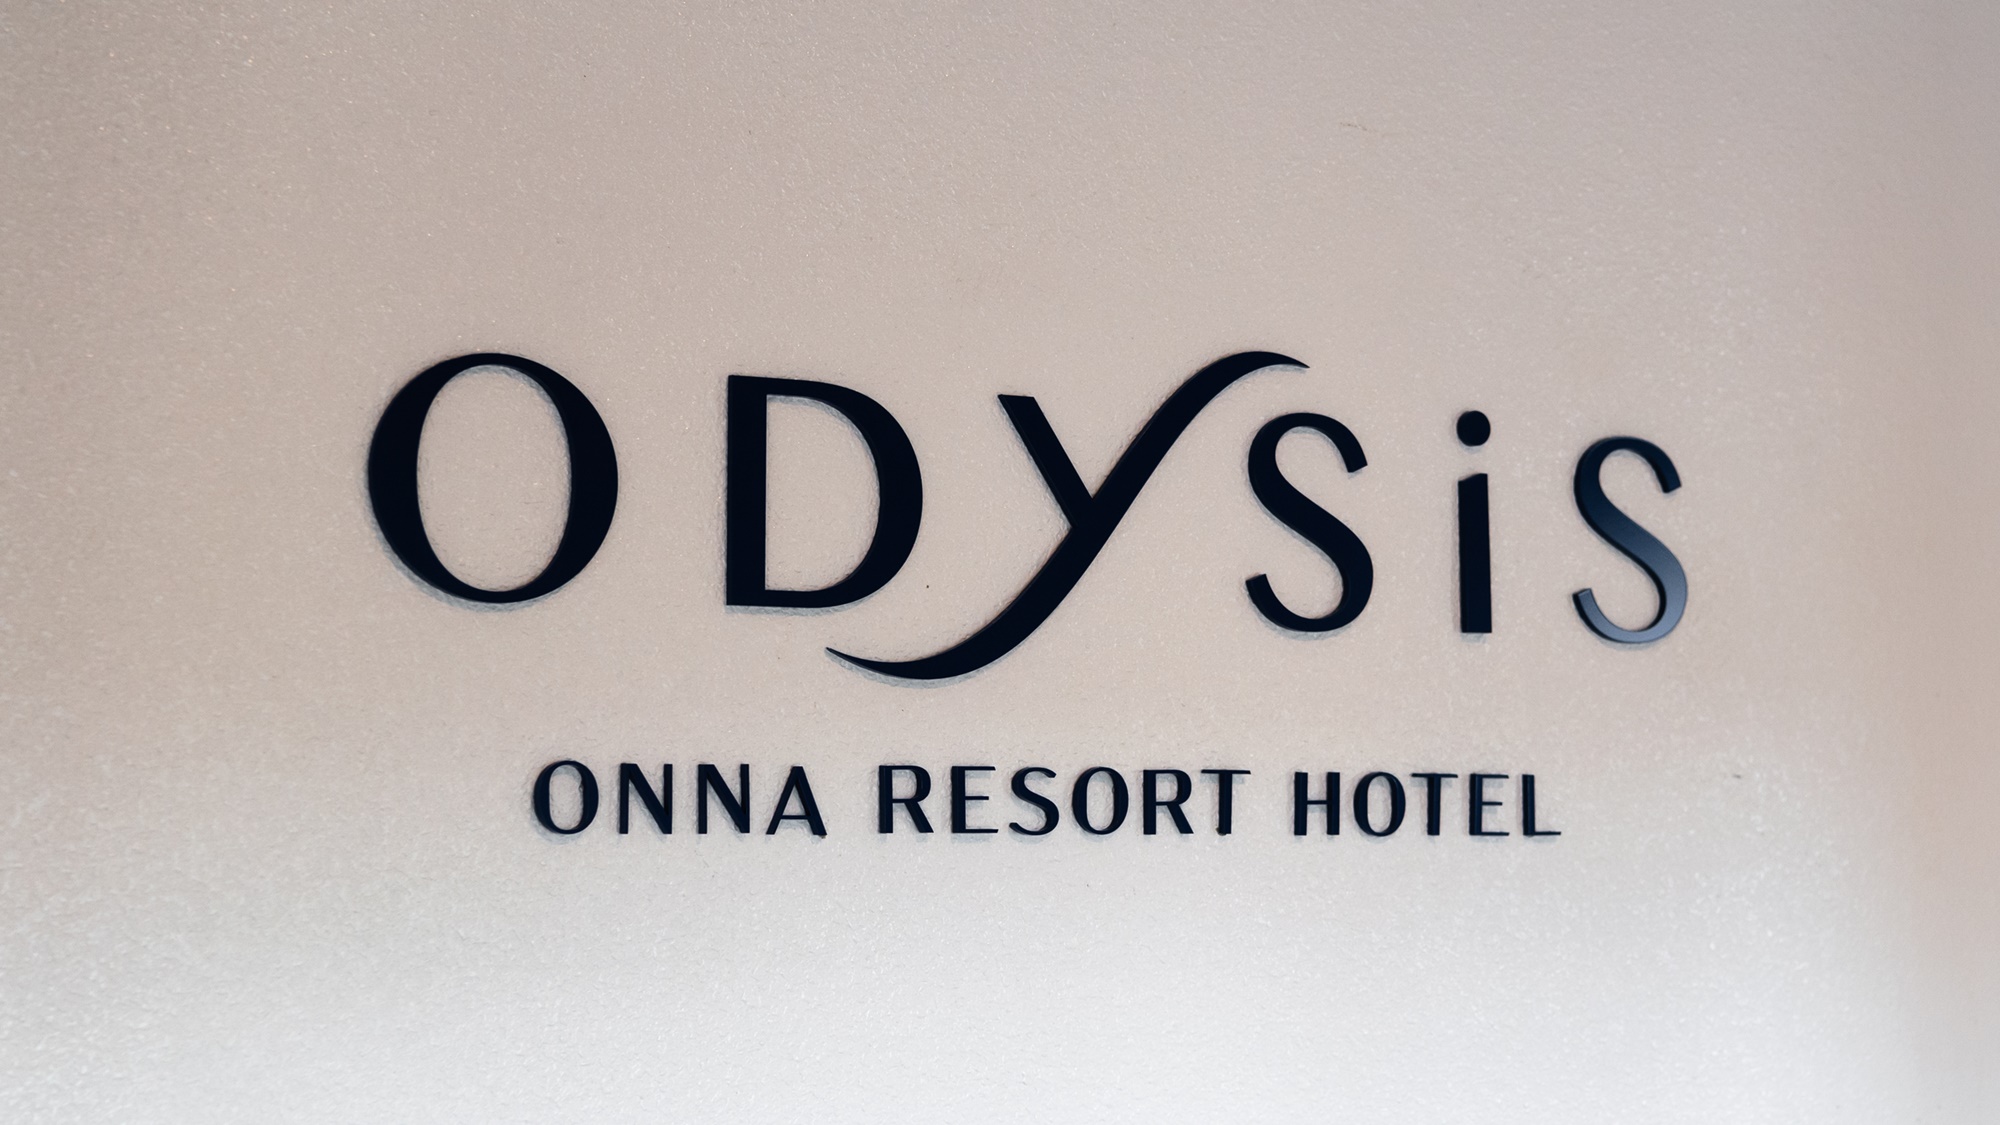 Odysis Onna Resort Hotel